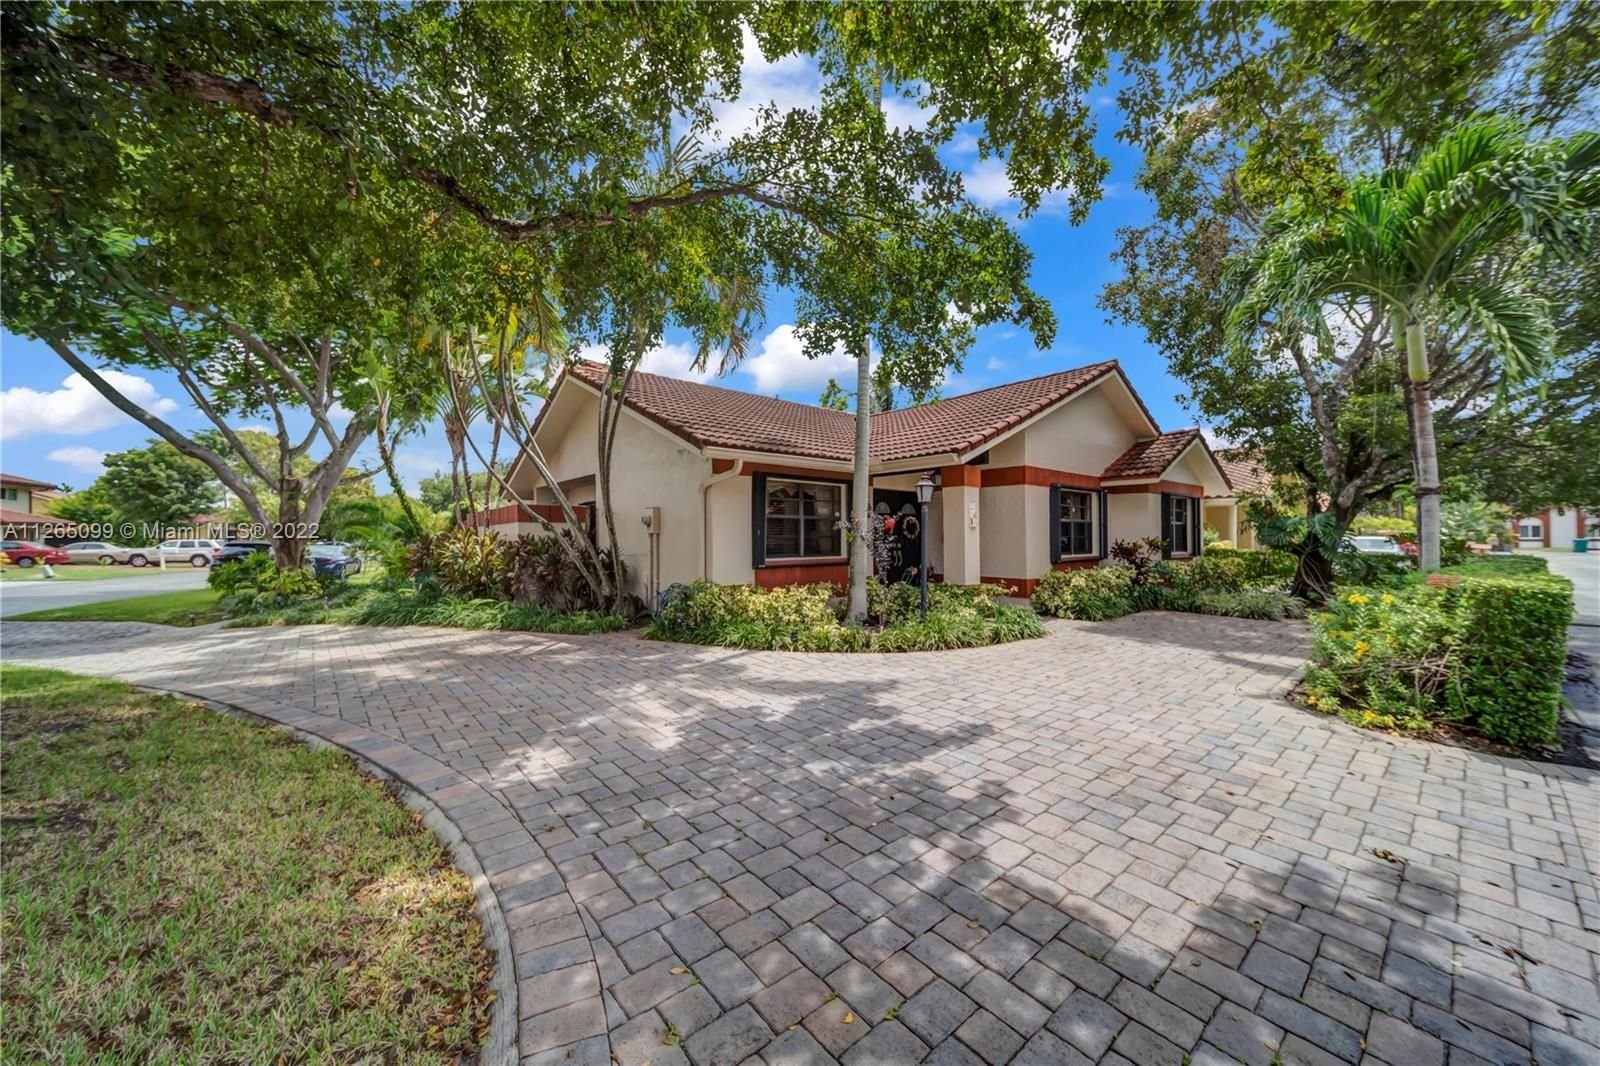 Real estate property located at 7457 112th Pl, Miami-Dade County, Miami, FL